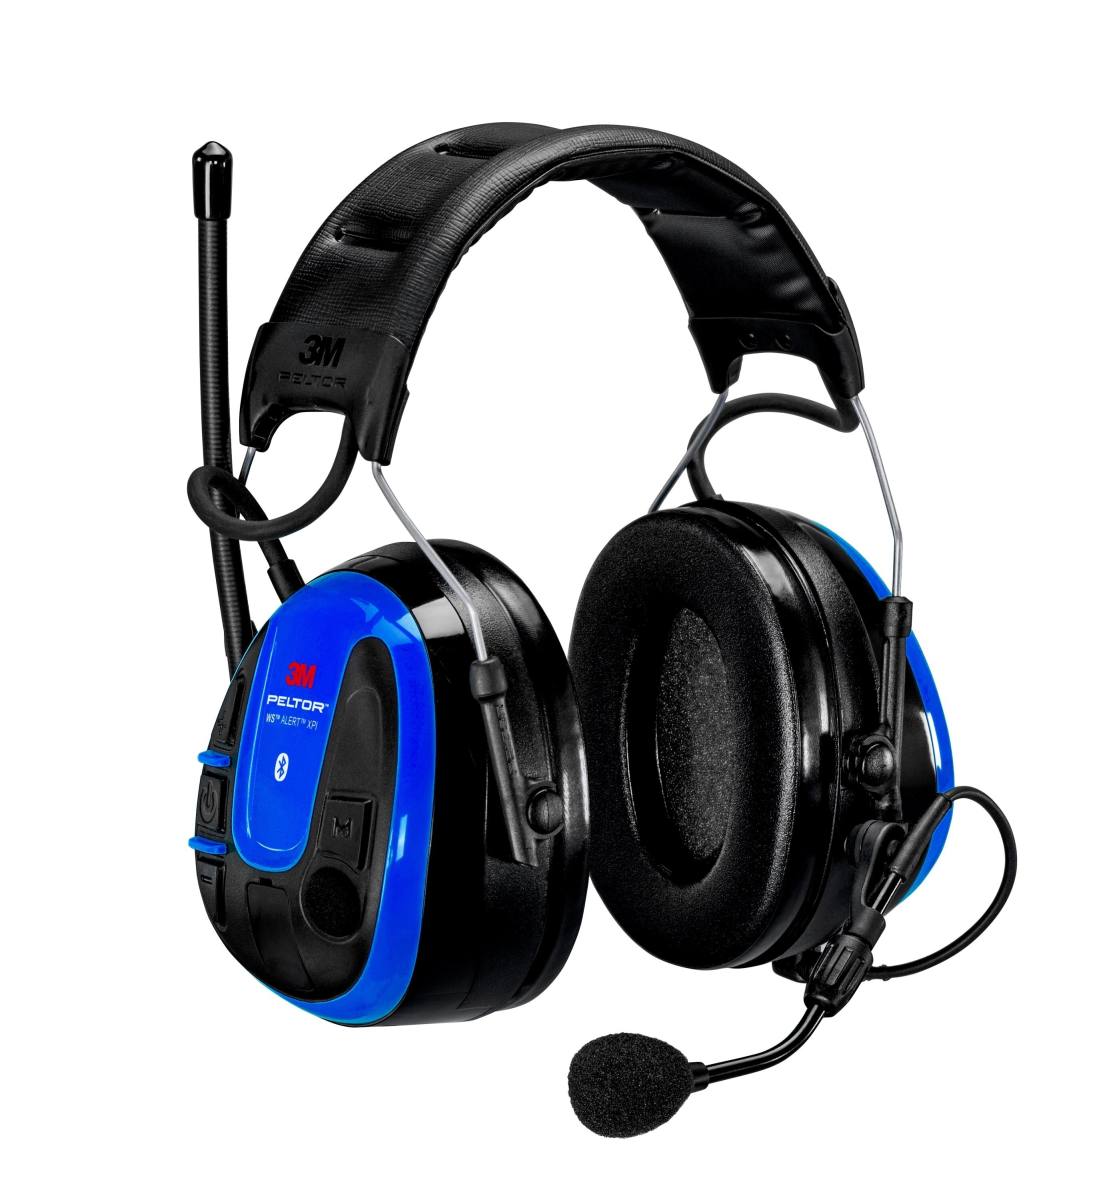 3M Peltor WS ALERT XPI headset, 30 dB, Bluetooth MultiPoint technology, ambient listening, FM radio, app control headband, MRX21A3WS6